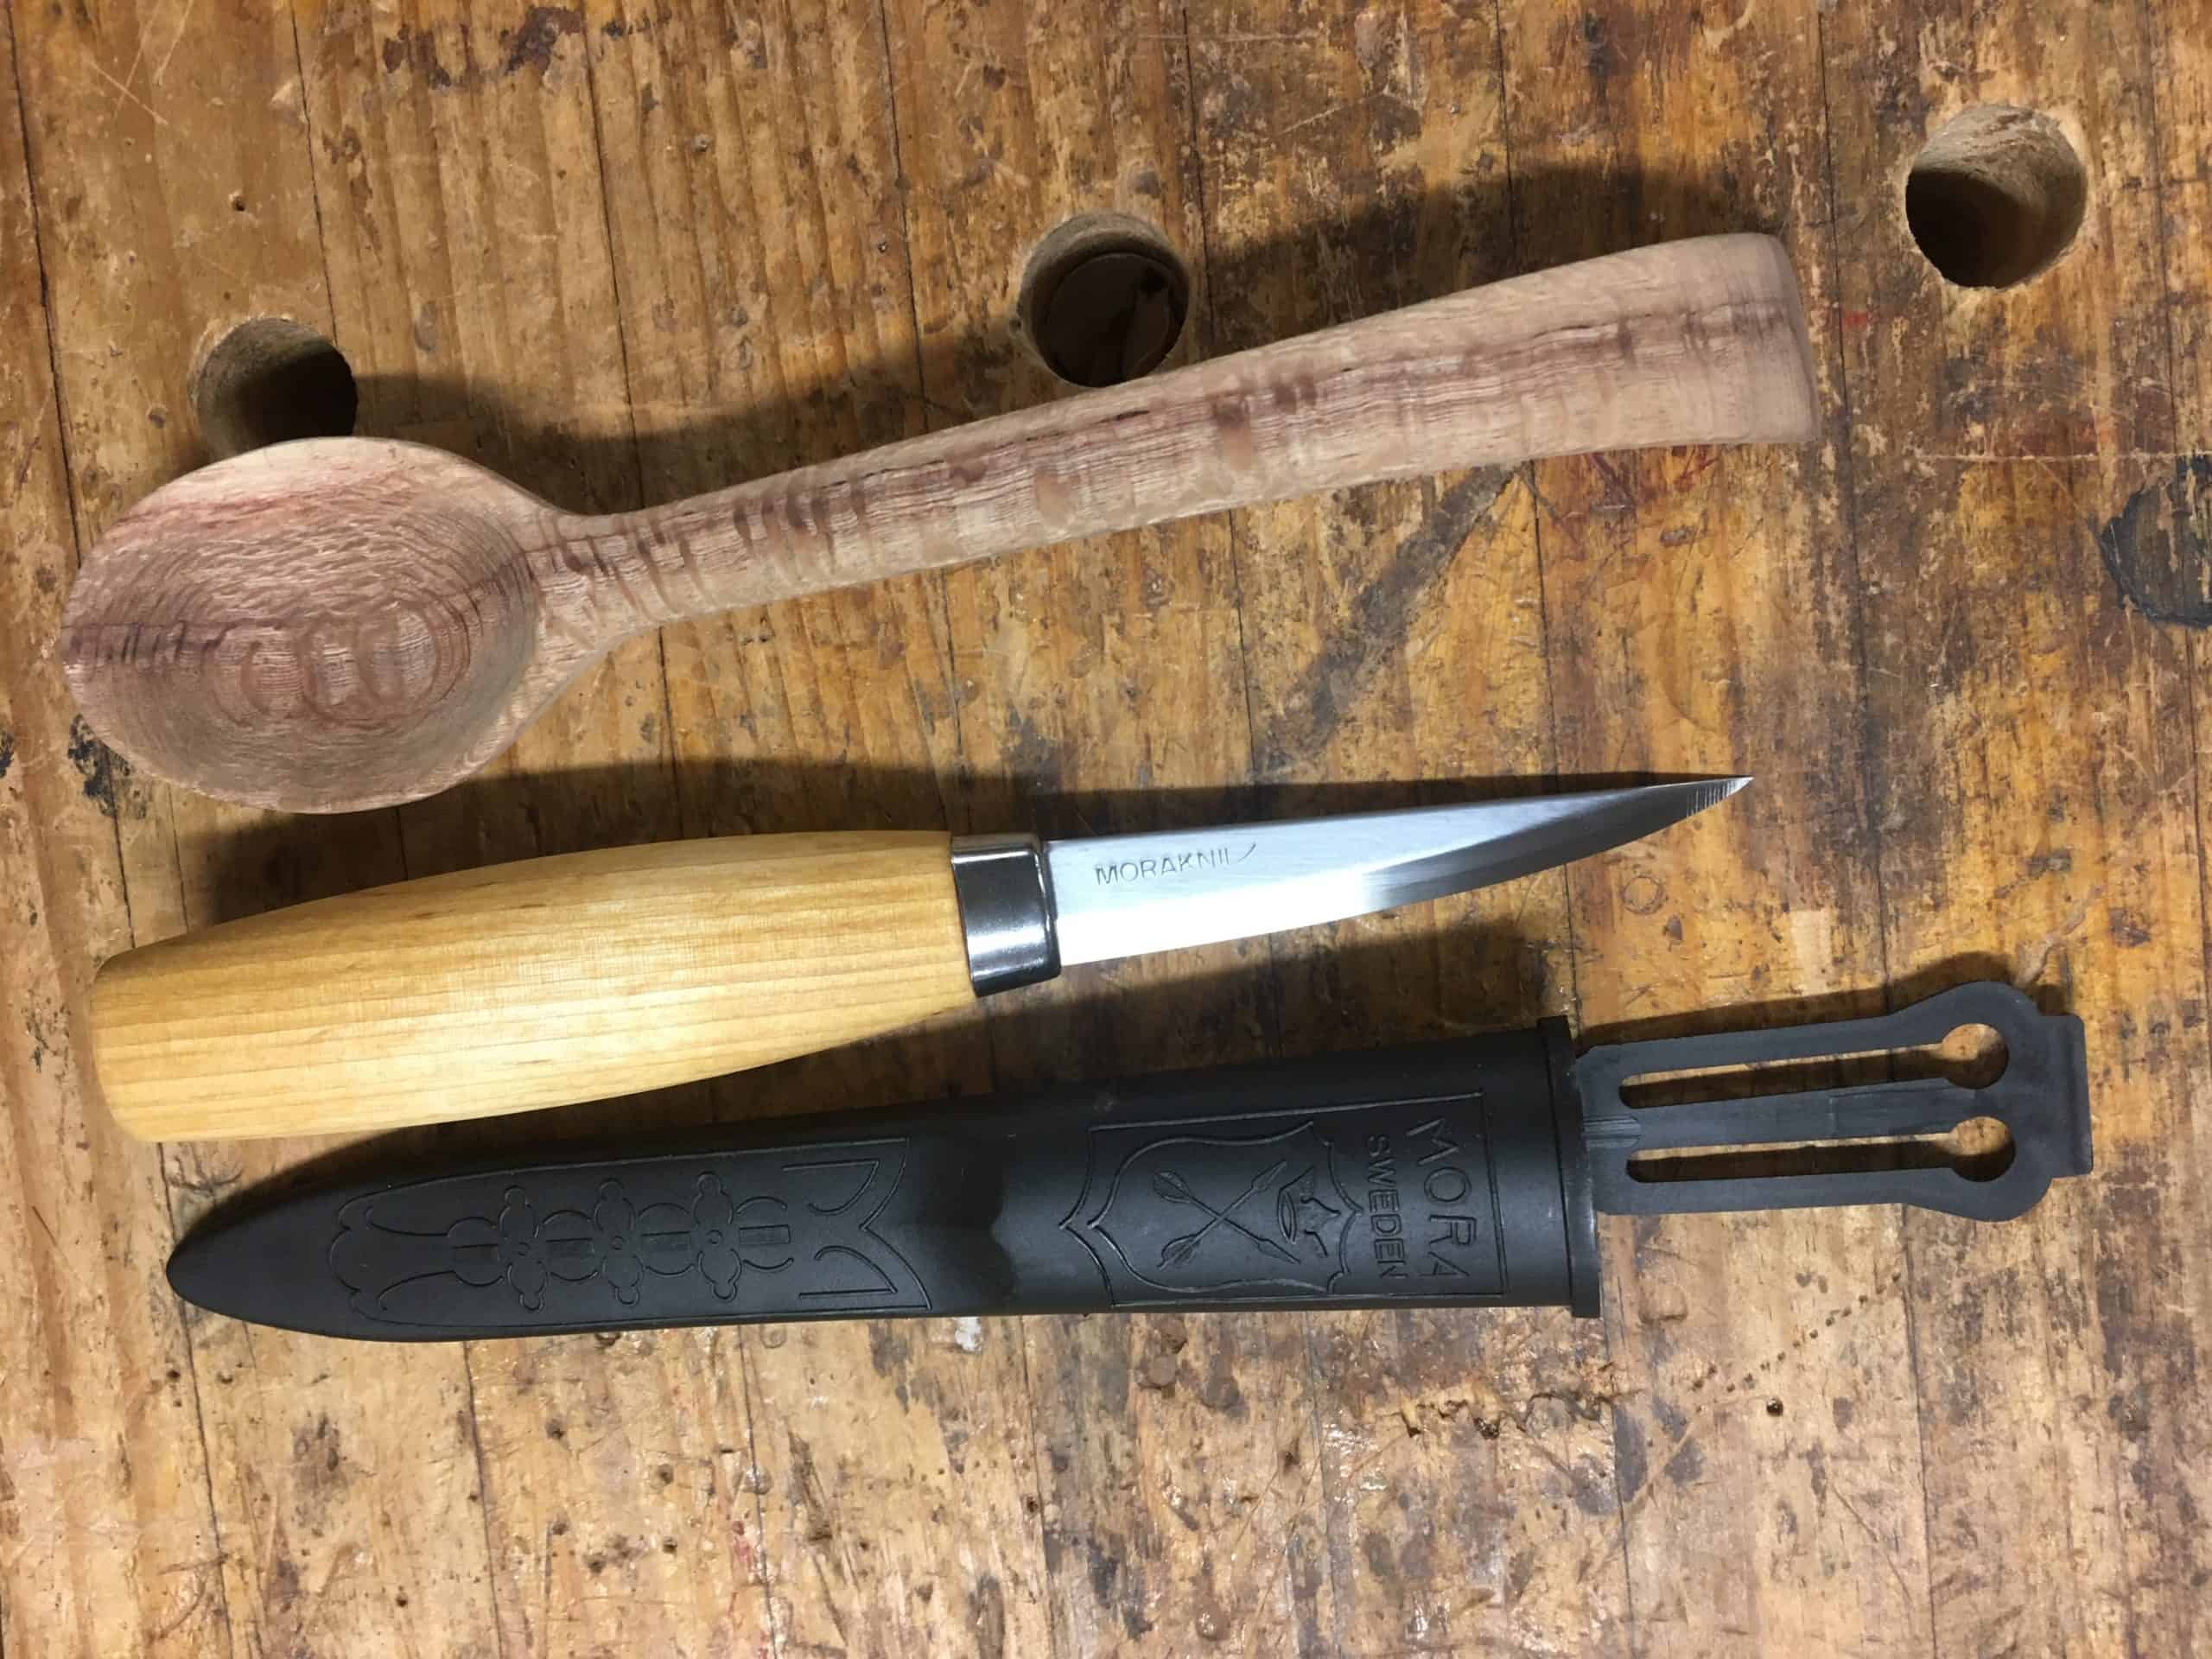 Mora 106 Sloyd Knife The Joy Of Wood